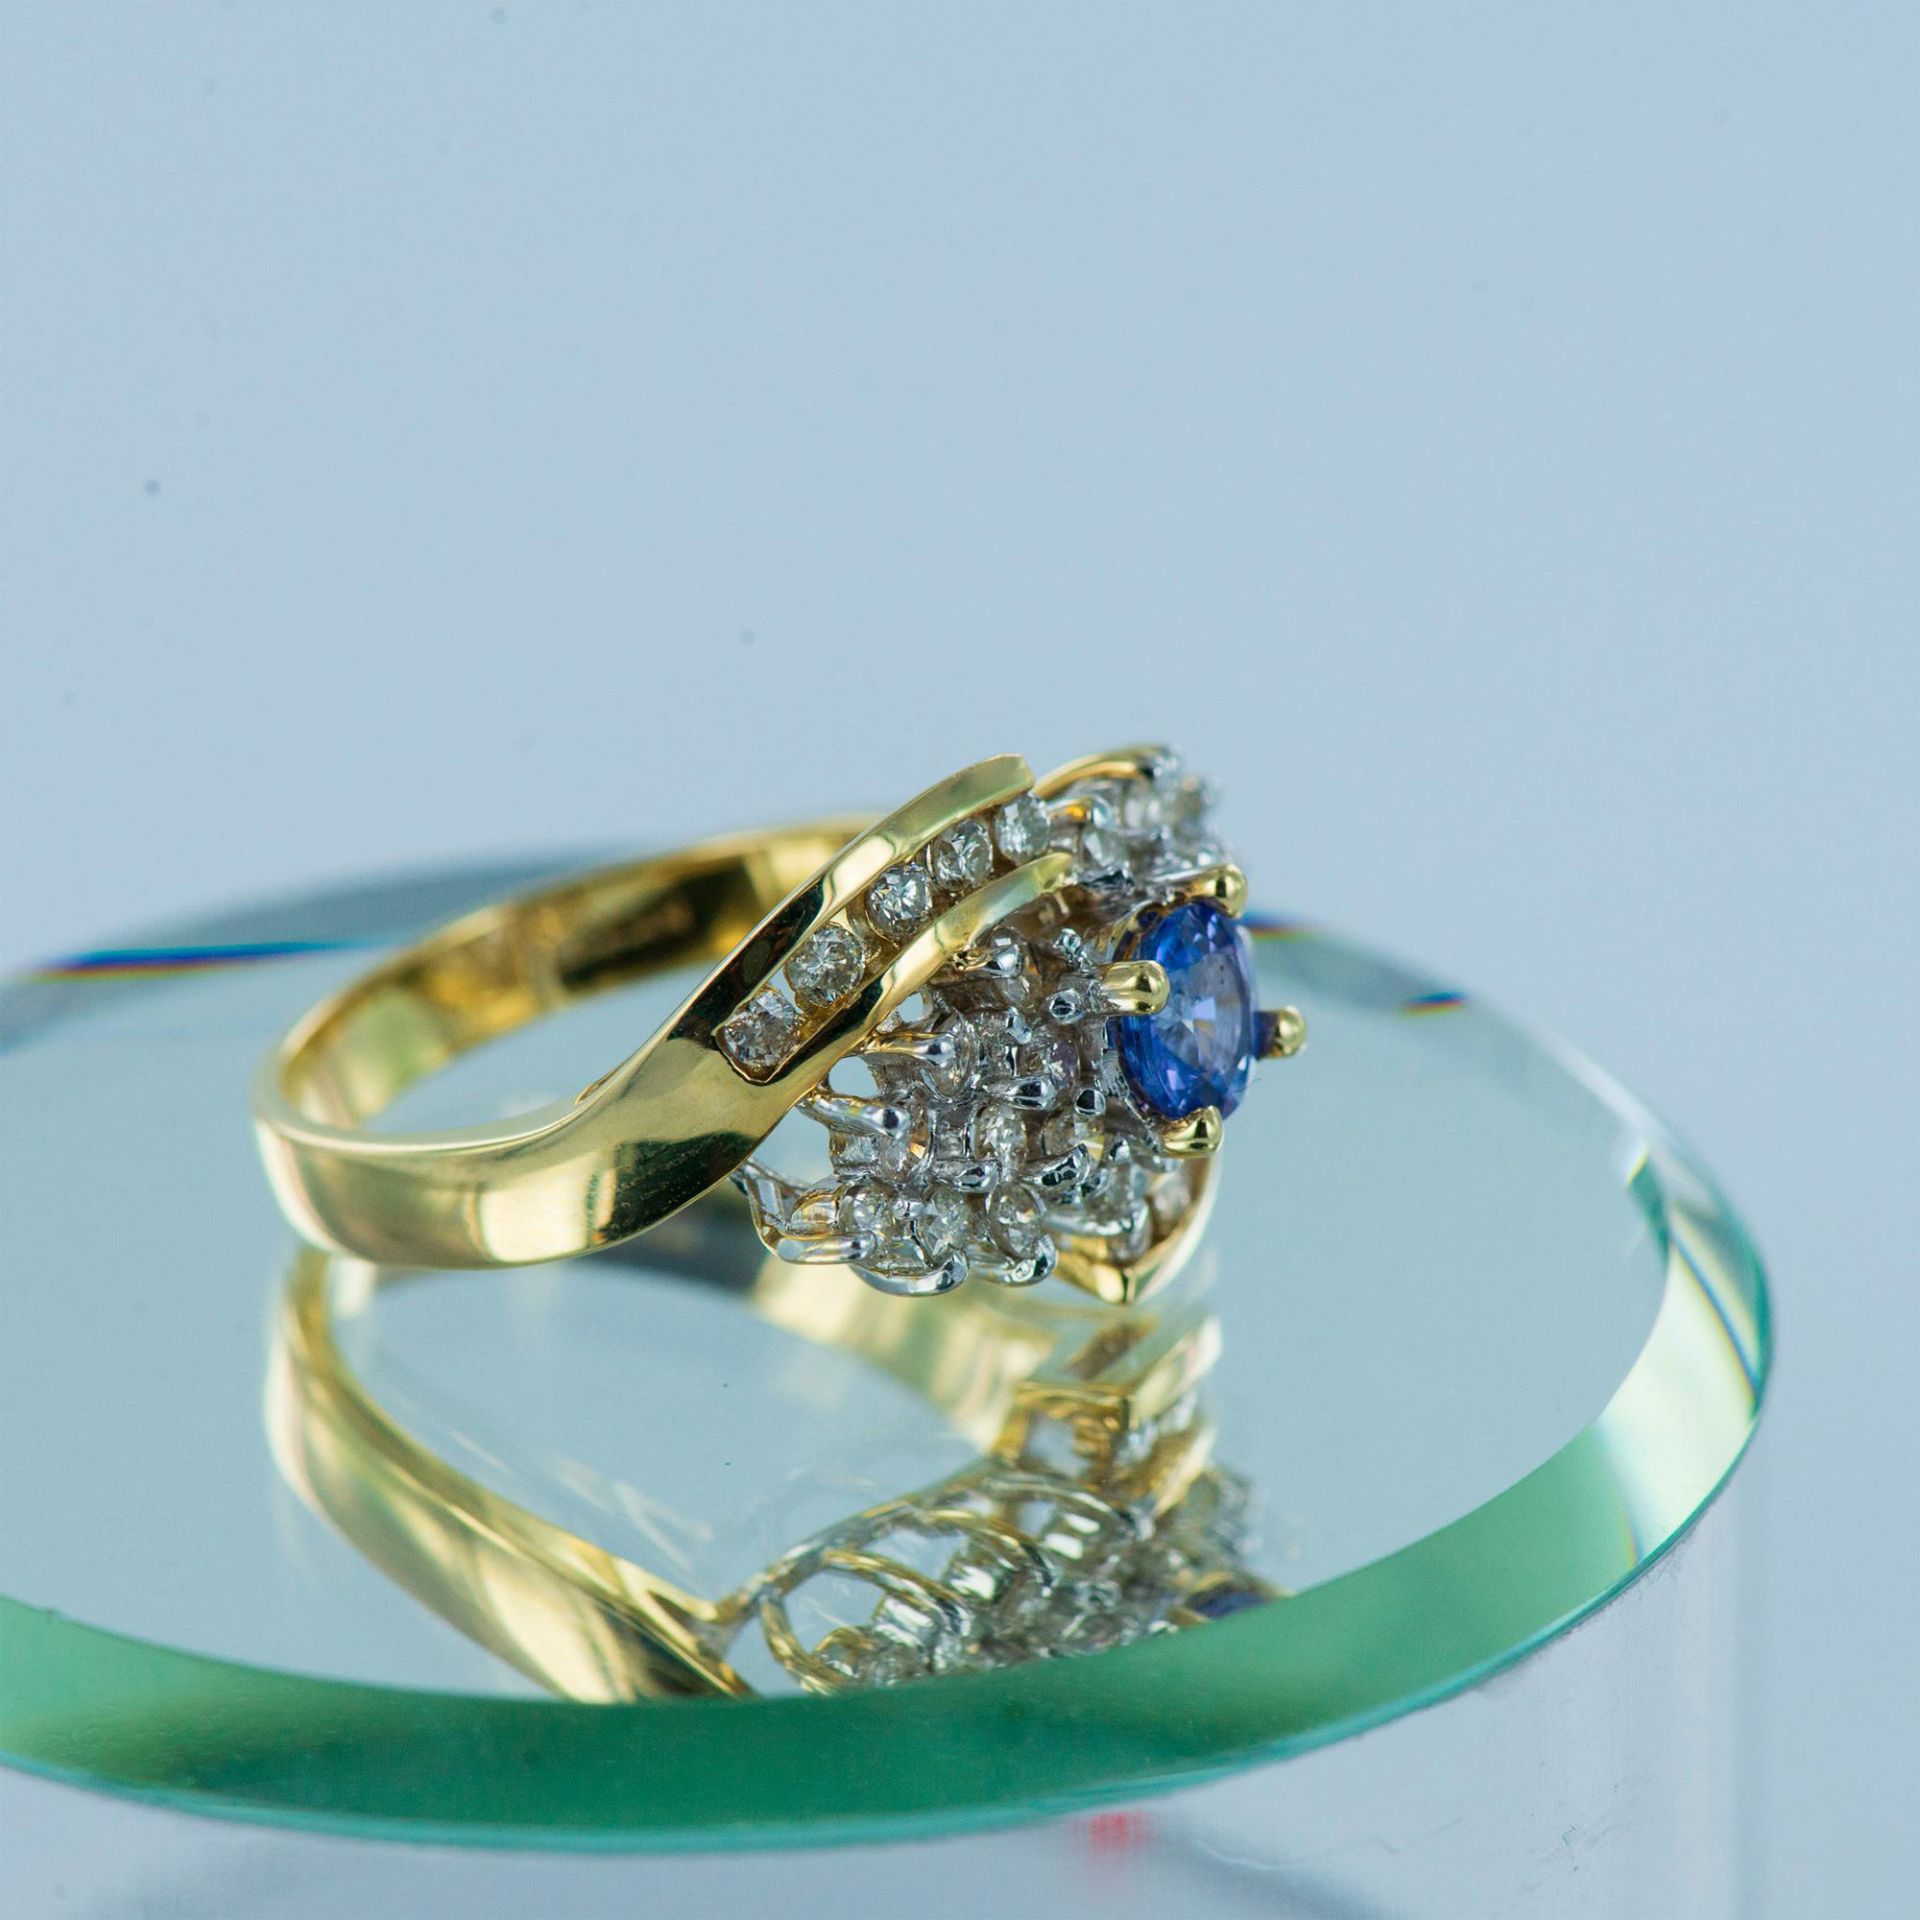 Stunning LeVian 14K Yellow Gold, Diamond, and Amethyst Ring - Image 3 of 10